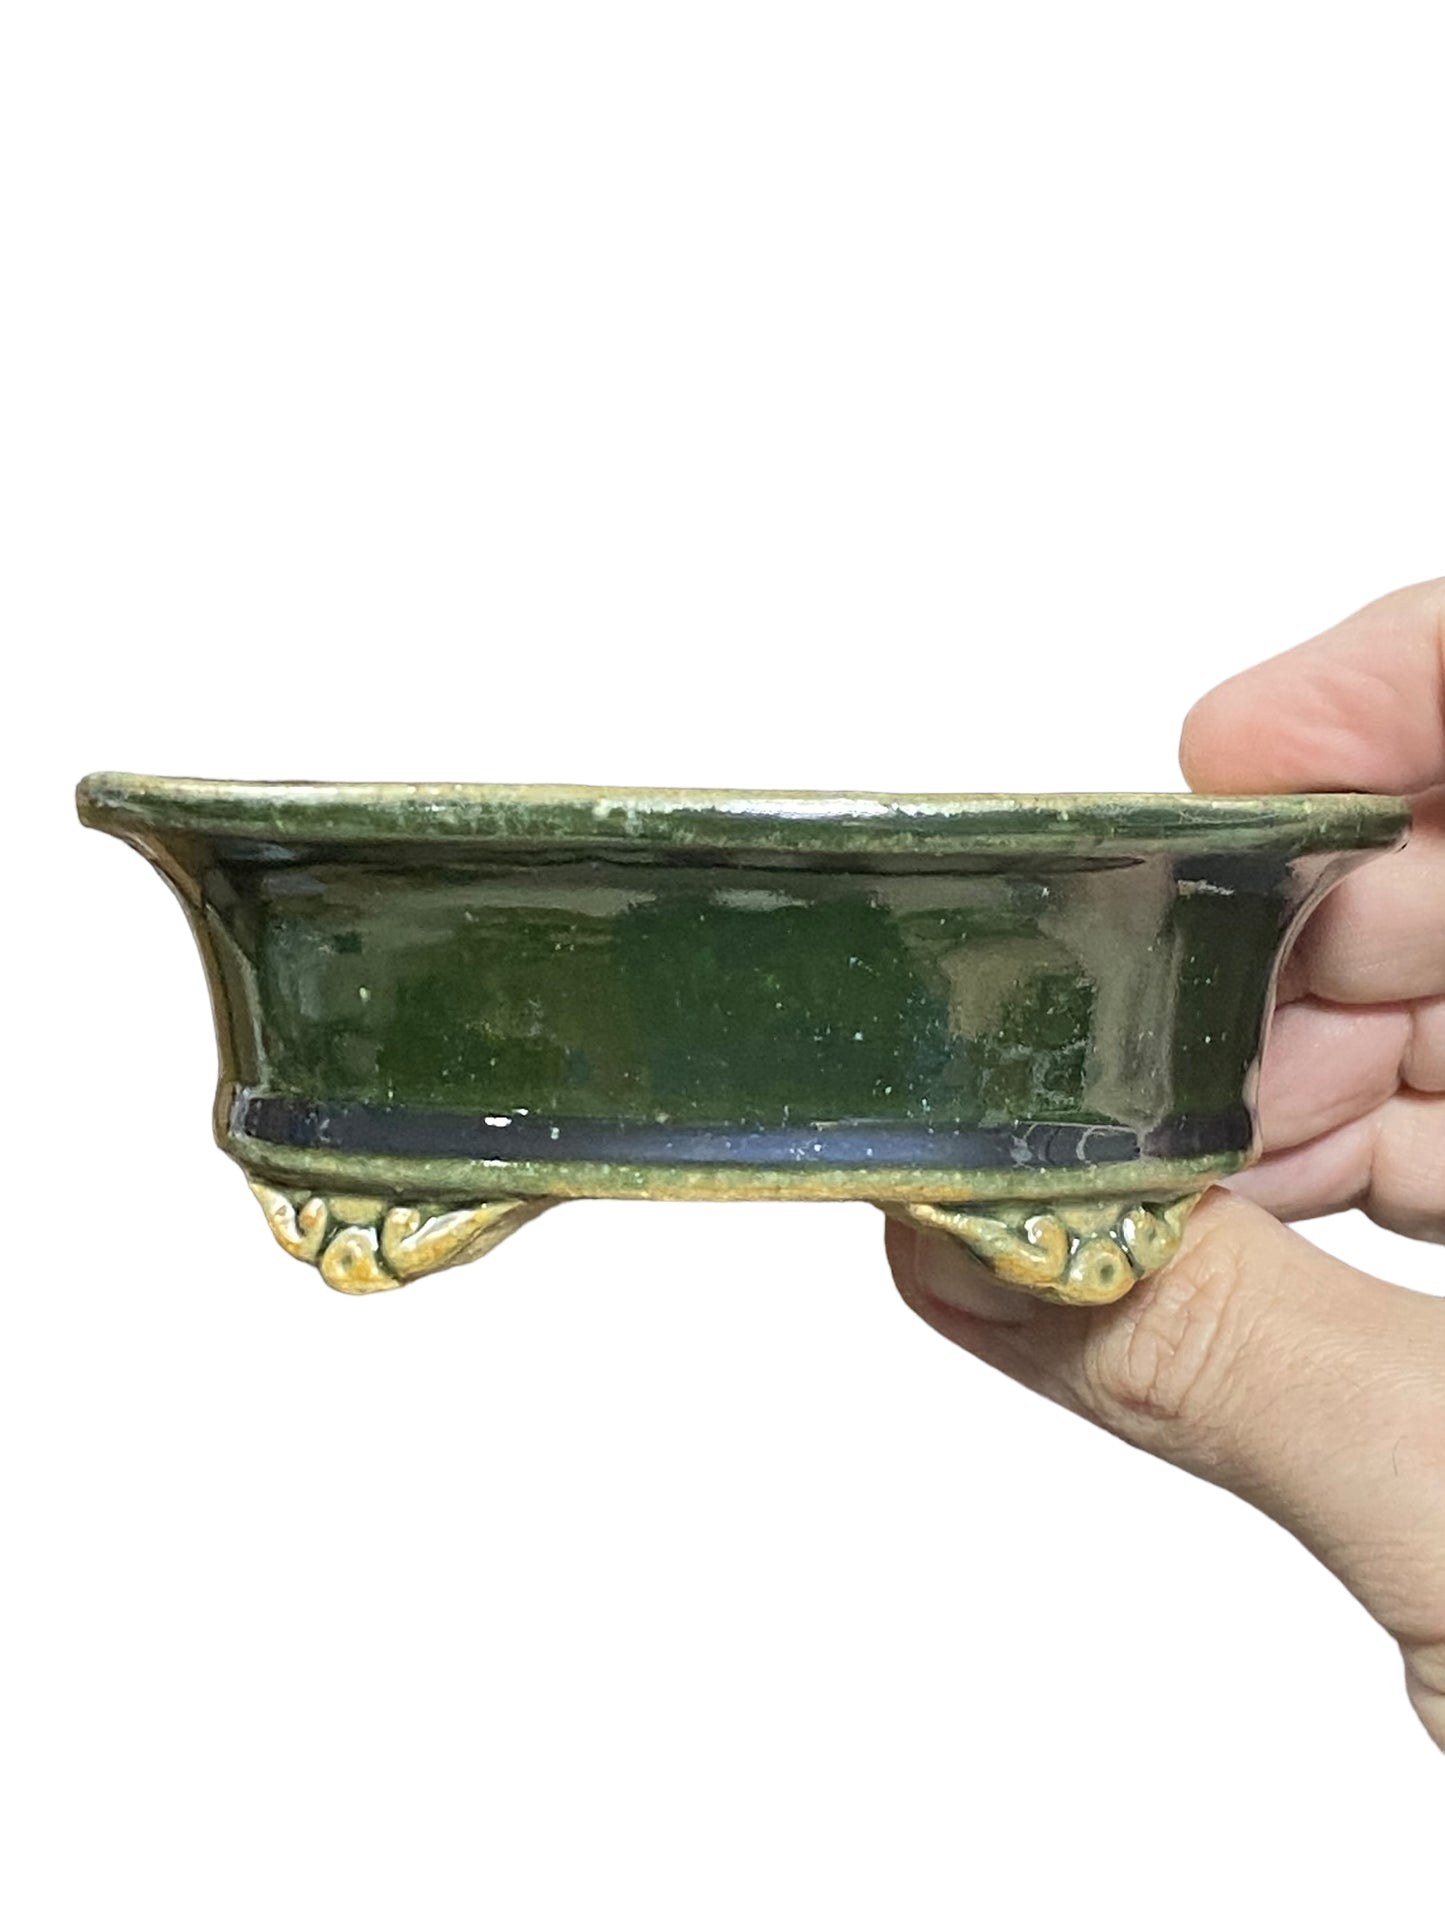 Shibakatsu - Rich Green Glazed Footed Oval Style Bonsai Pot